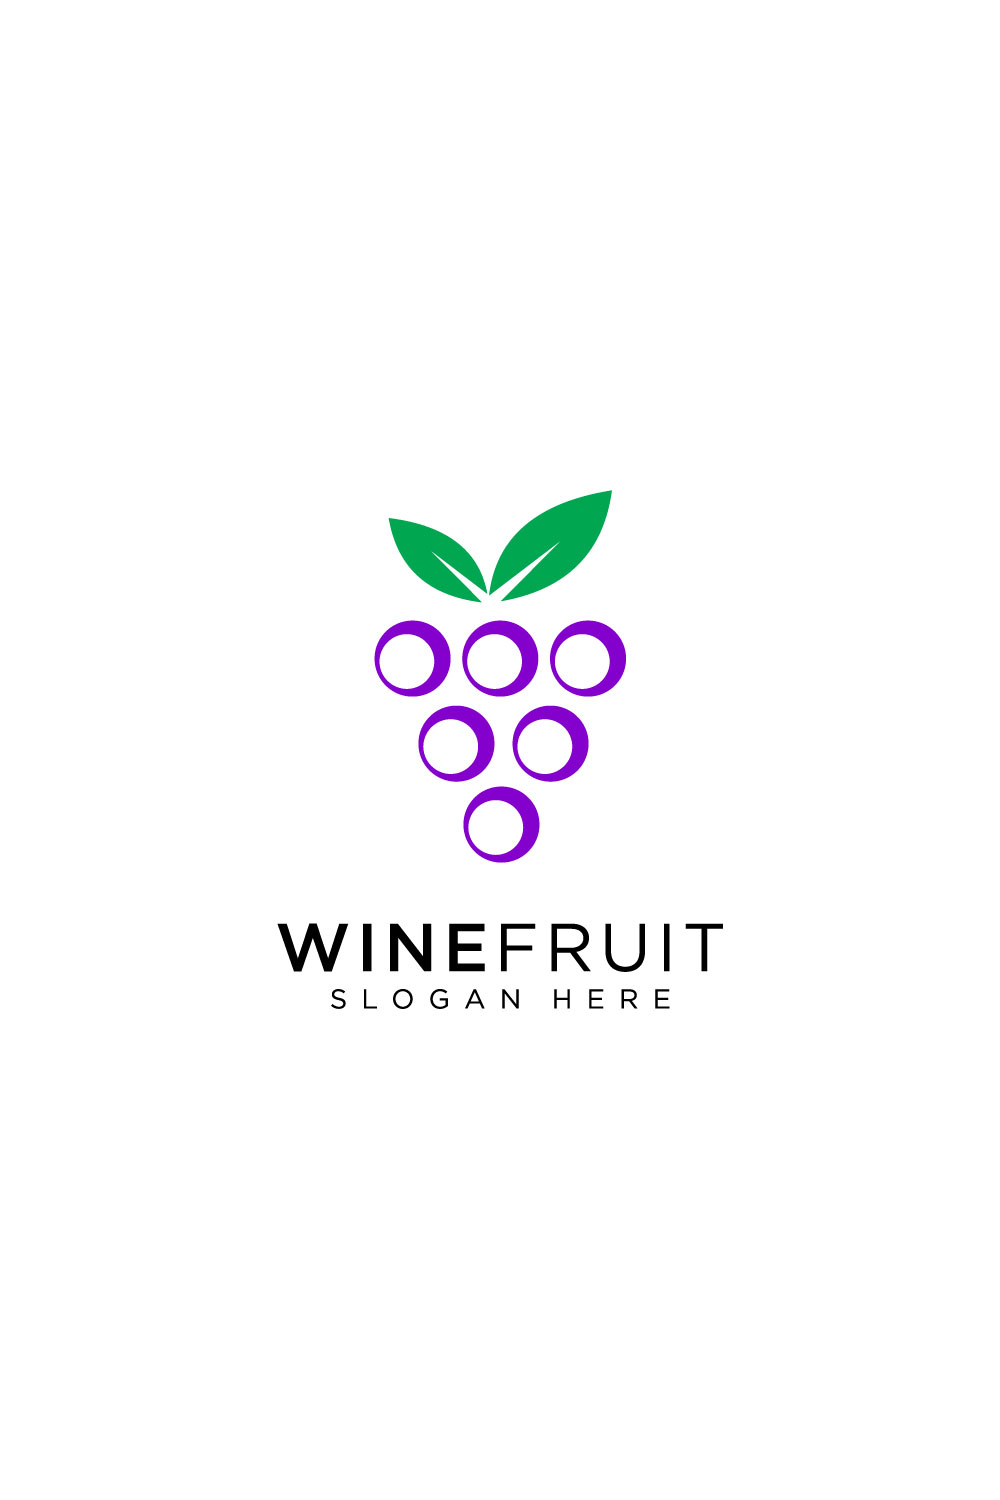 wine fruit logo design vector pinterest preview image.